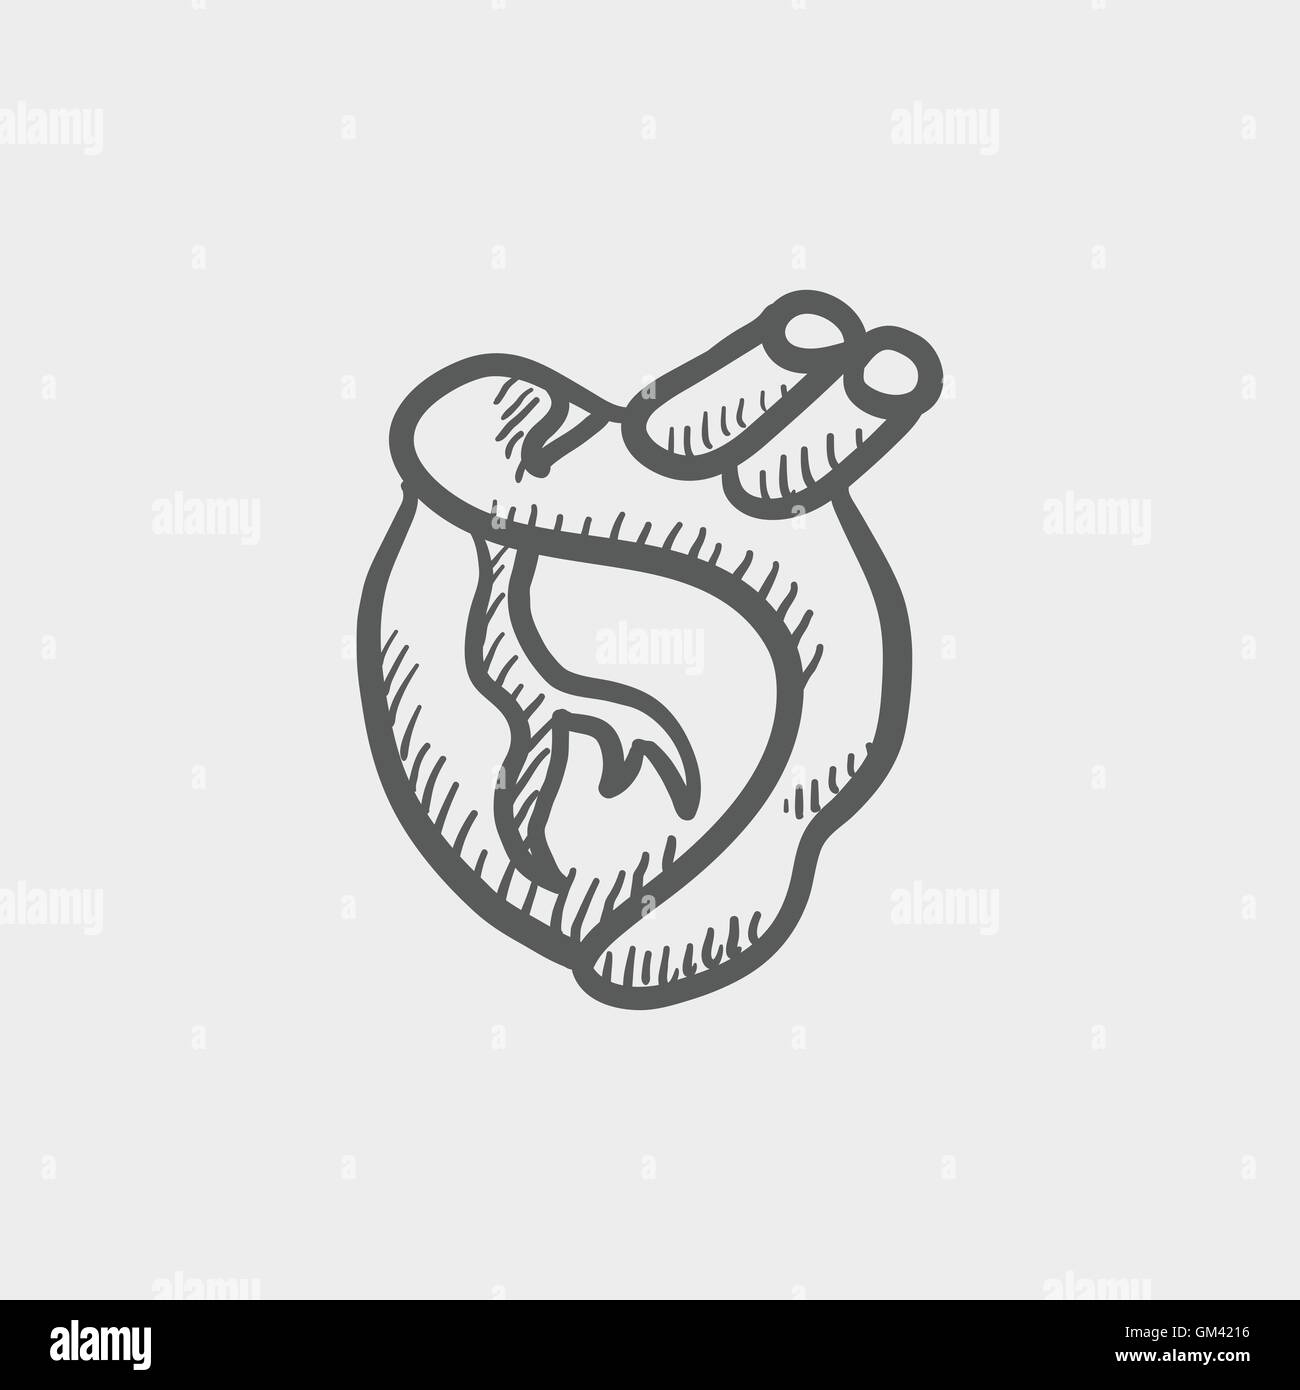 Human heart sketch icon Stock Vector